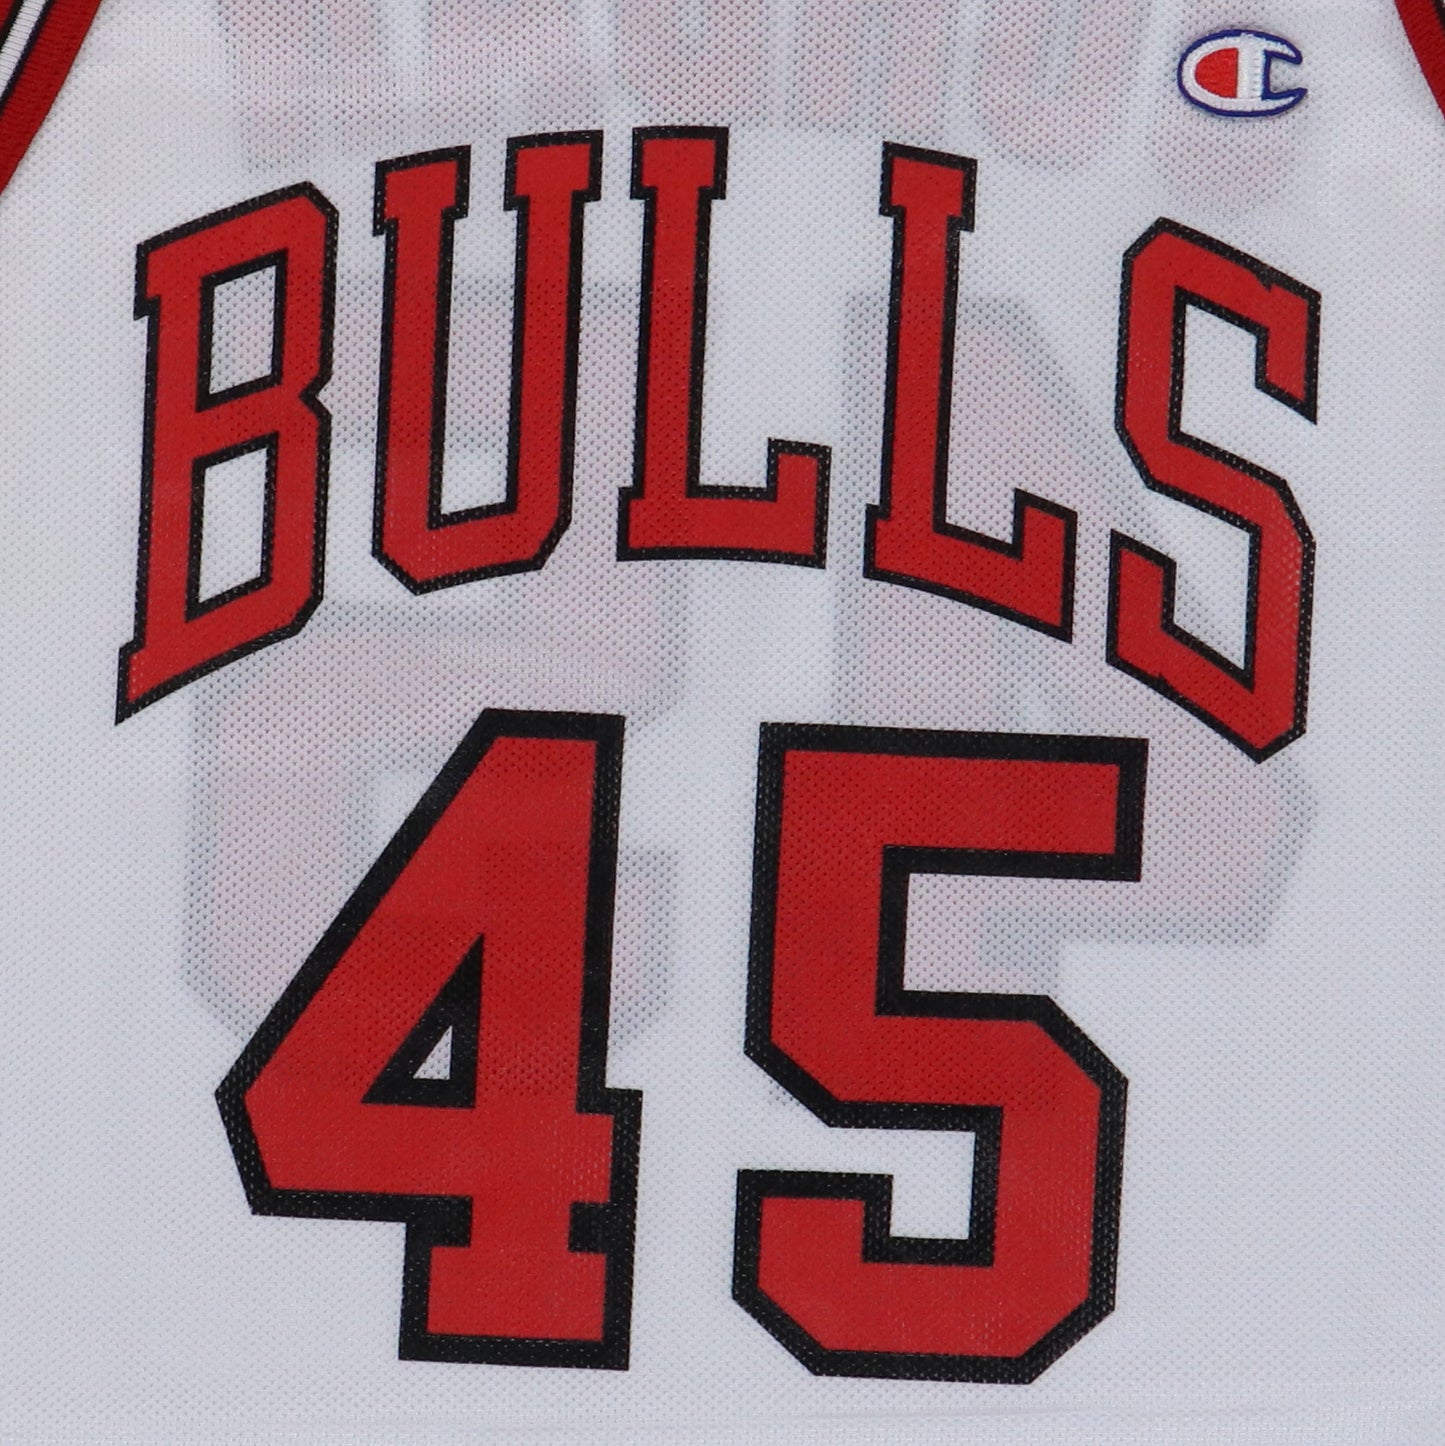 Chicago Bulls Michael Jordan 45 Champion Jersey